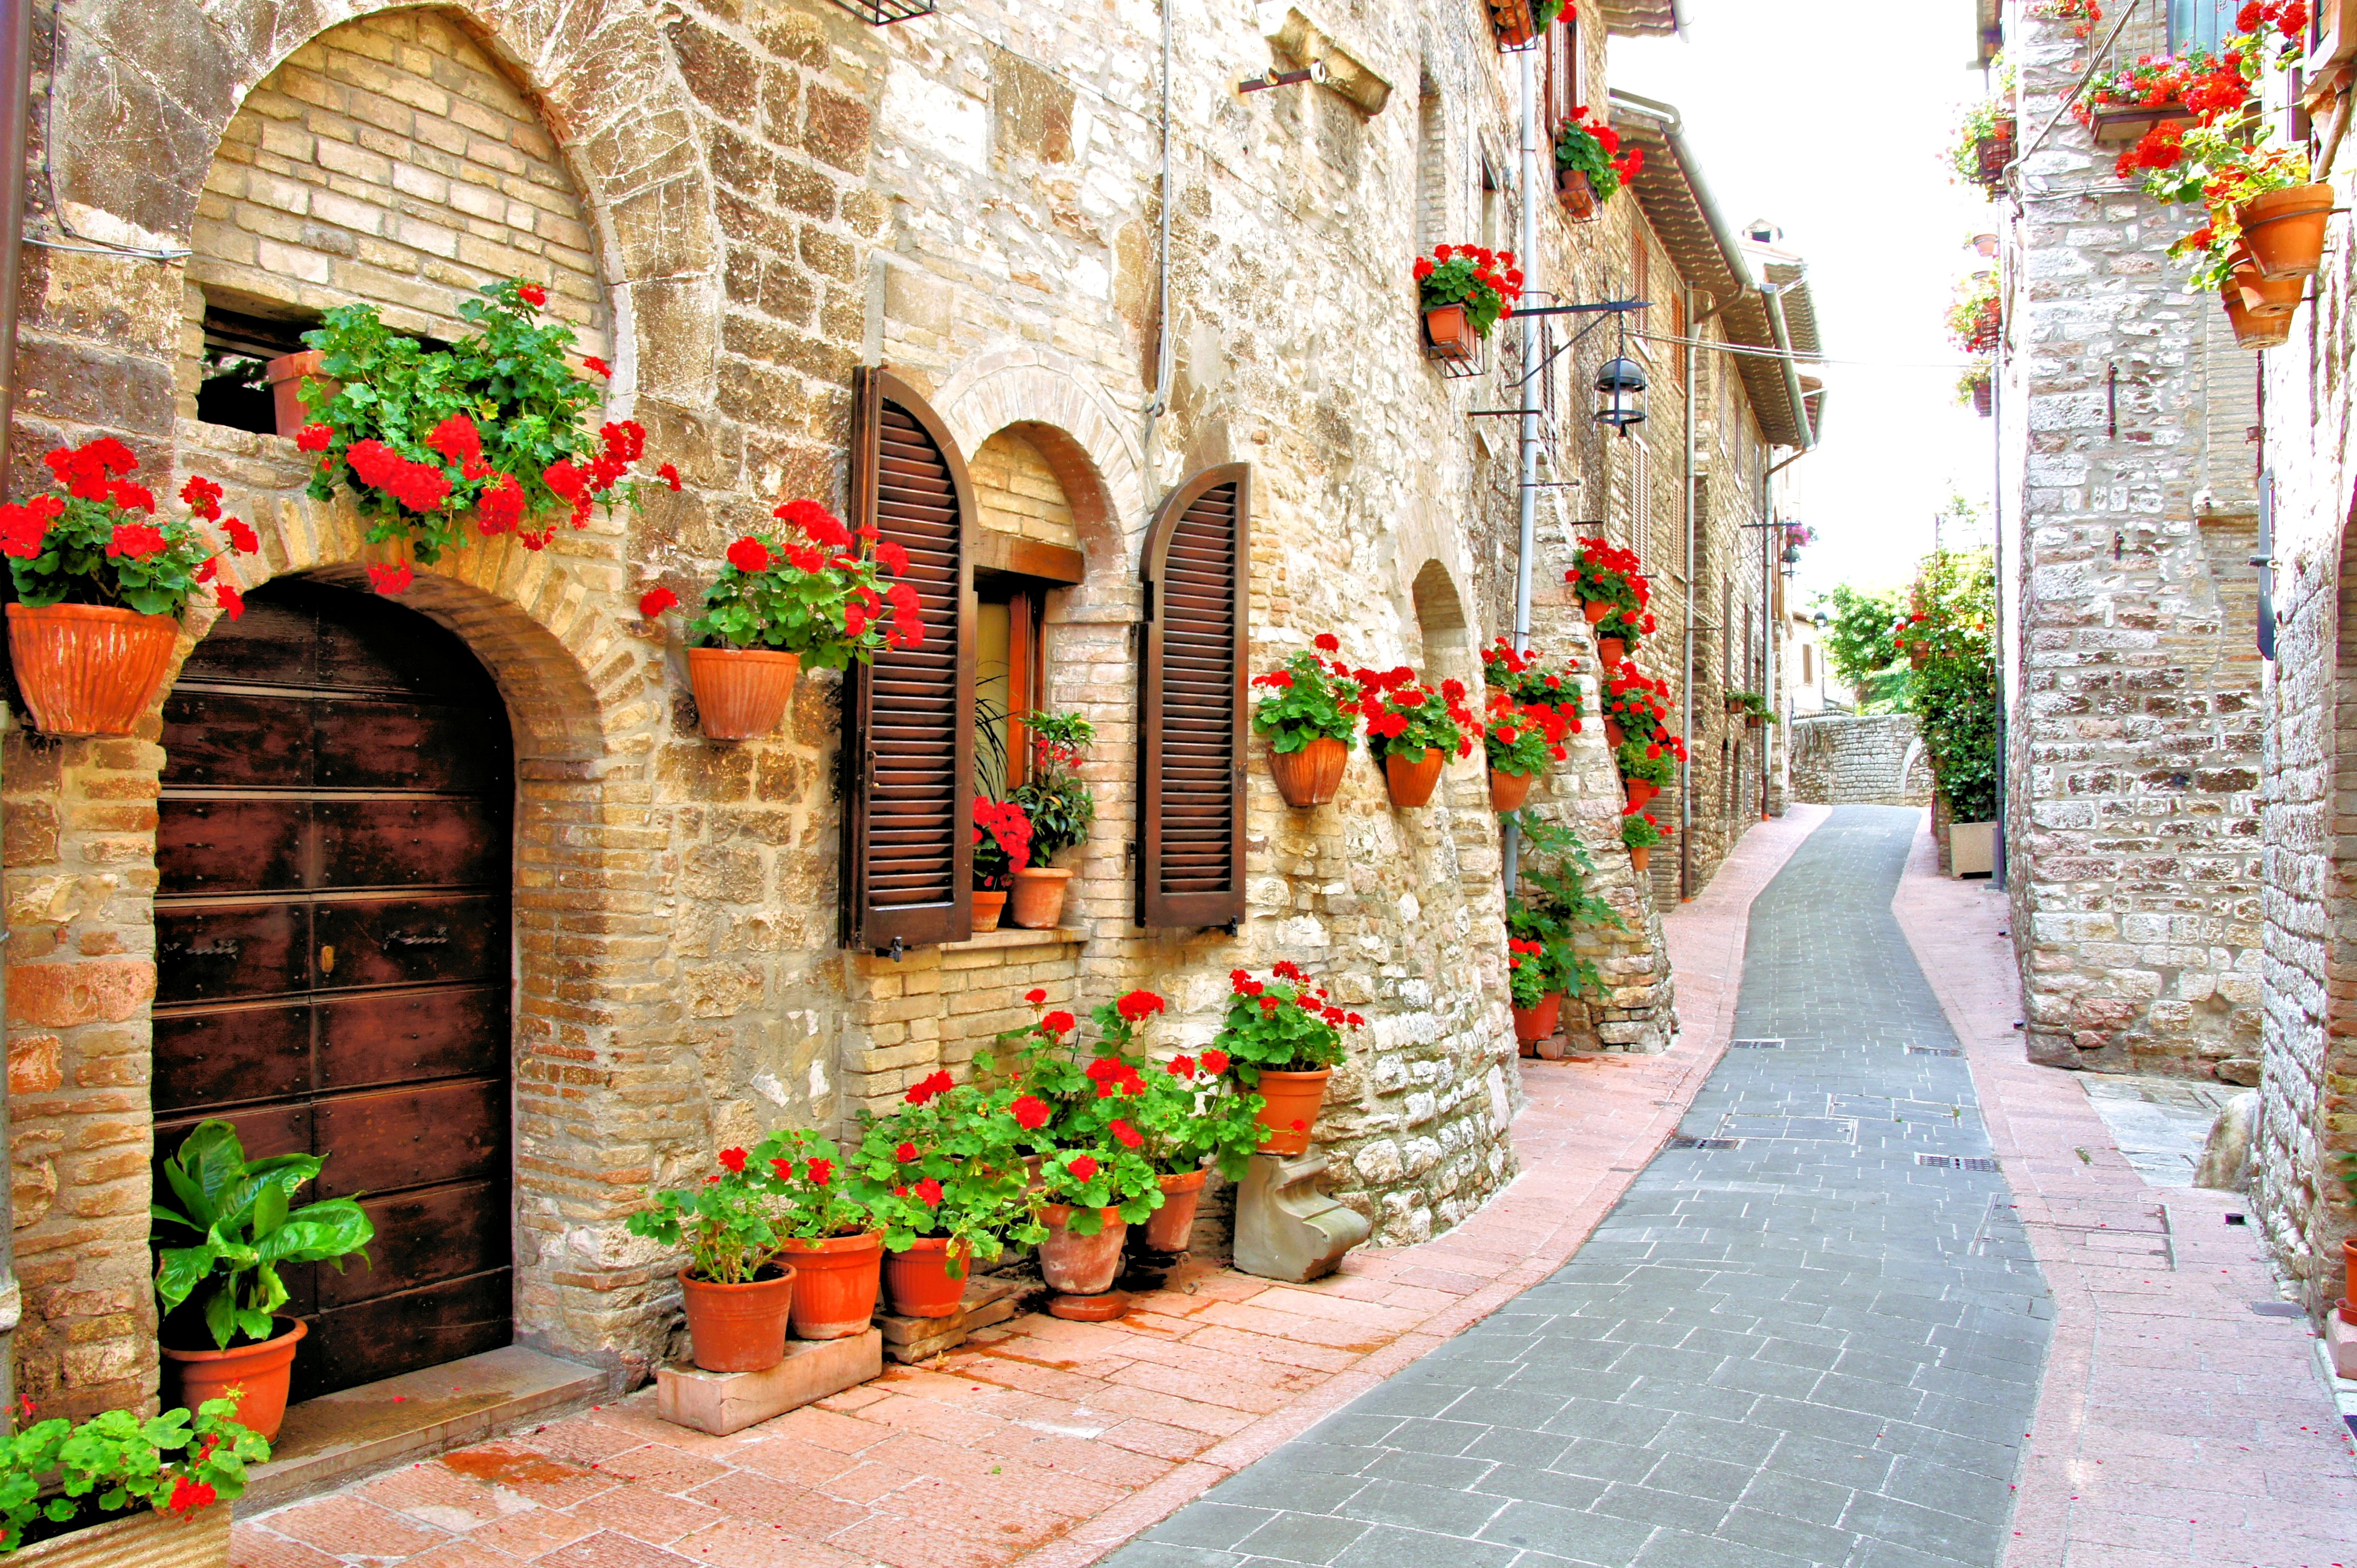 Street In Italy 4k Ultra HD Wallpaper Background Image